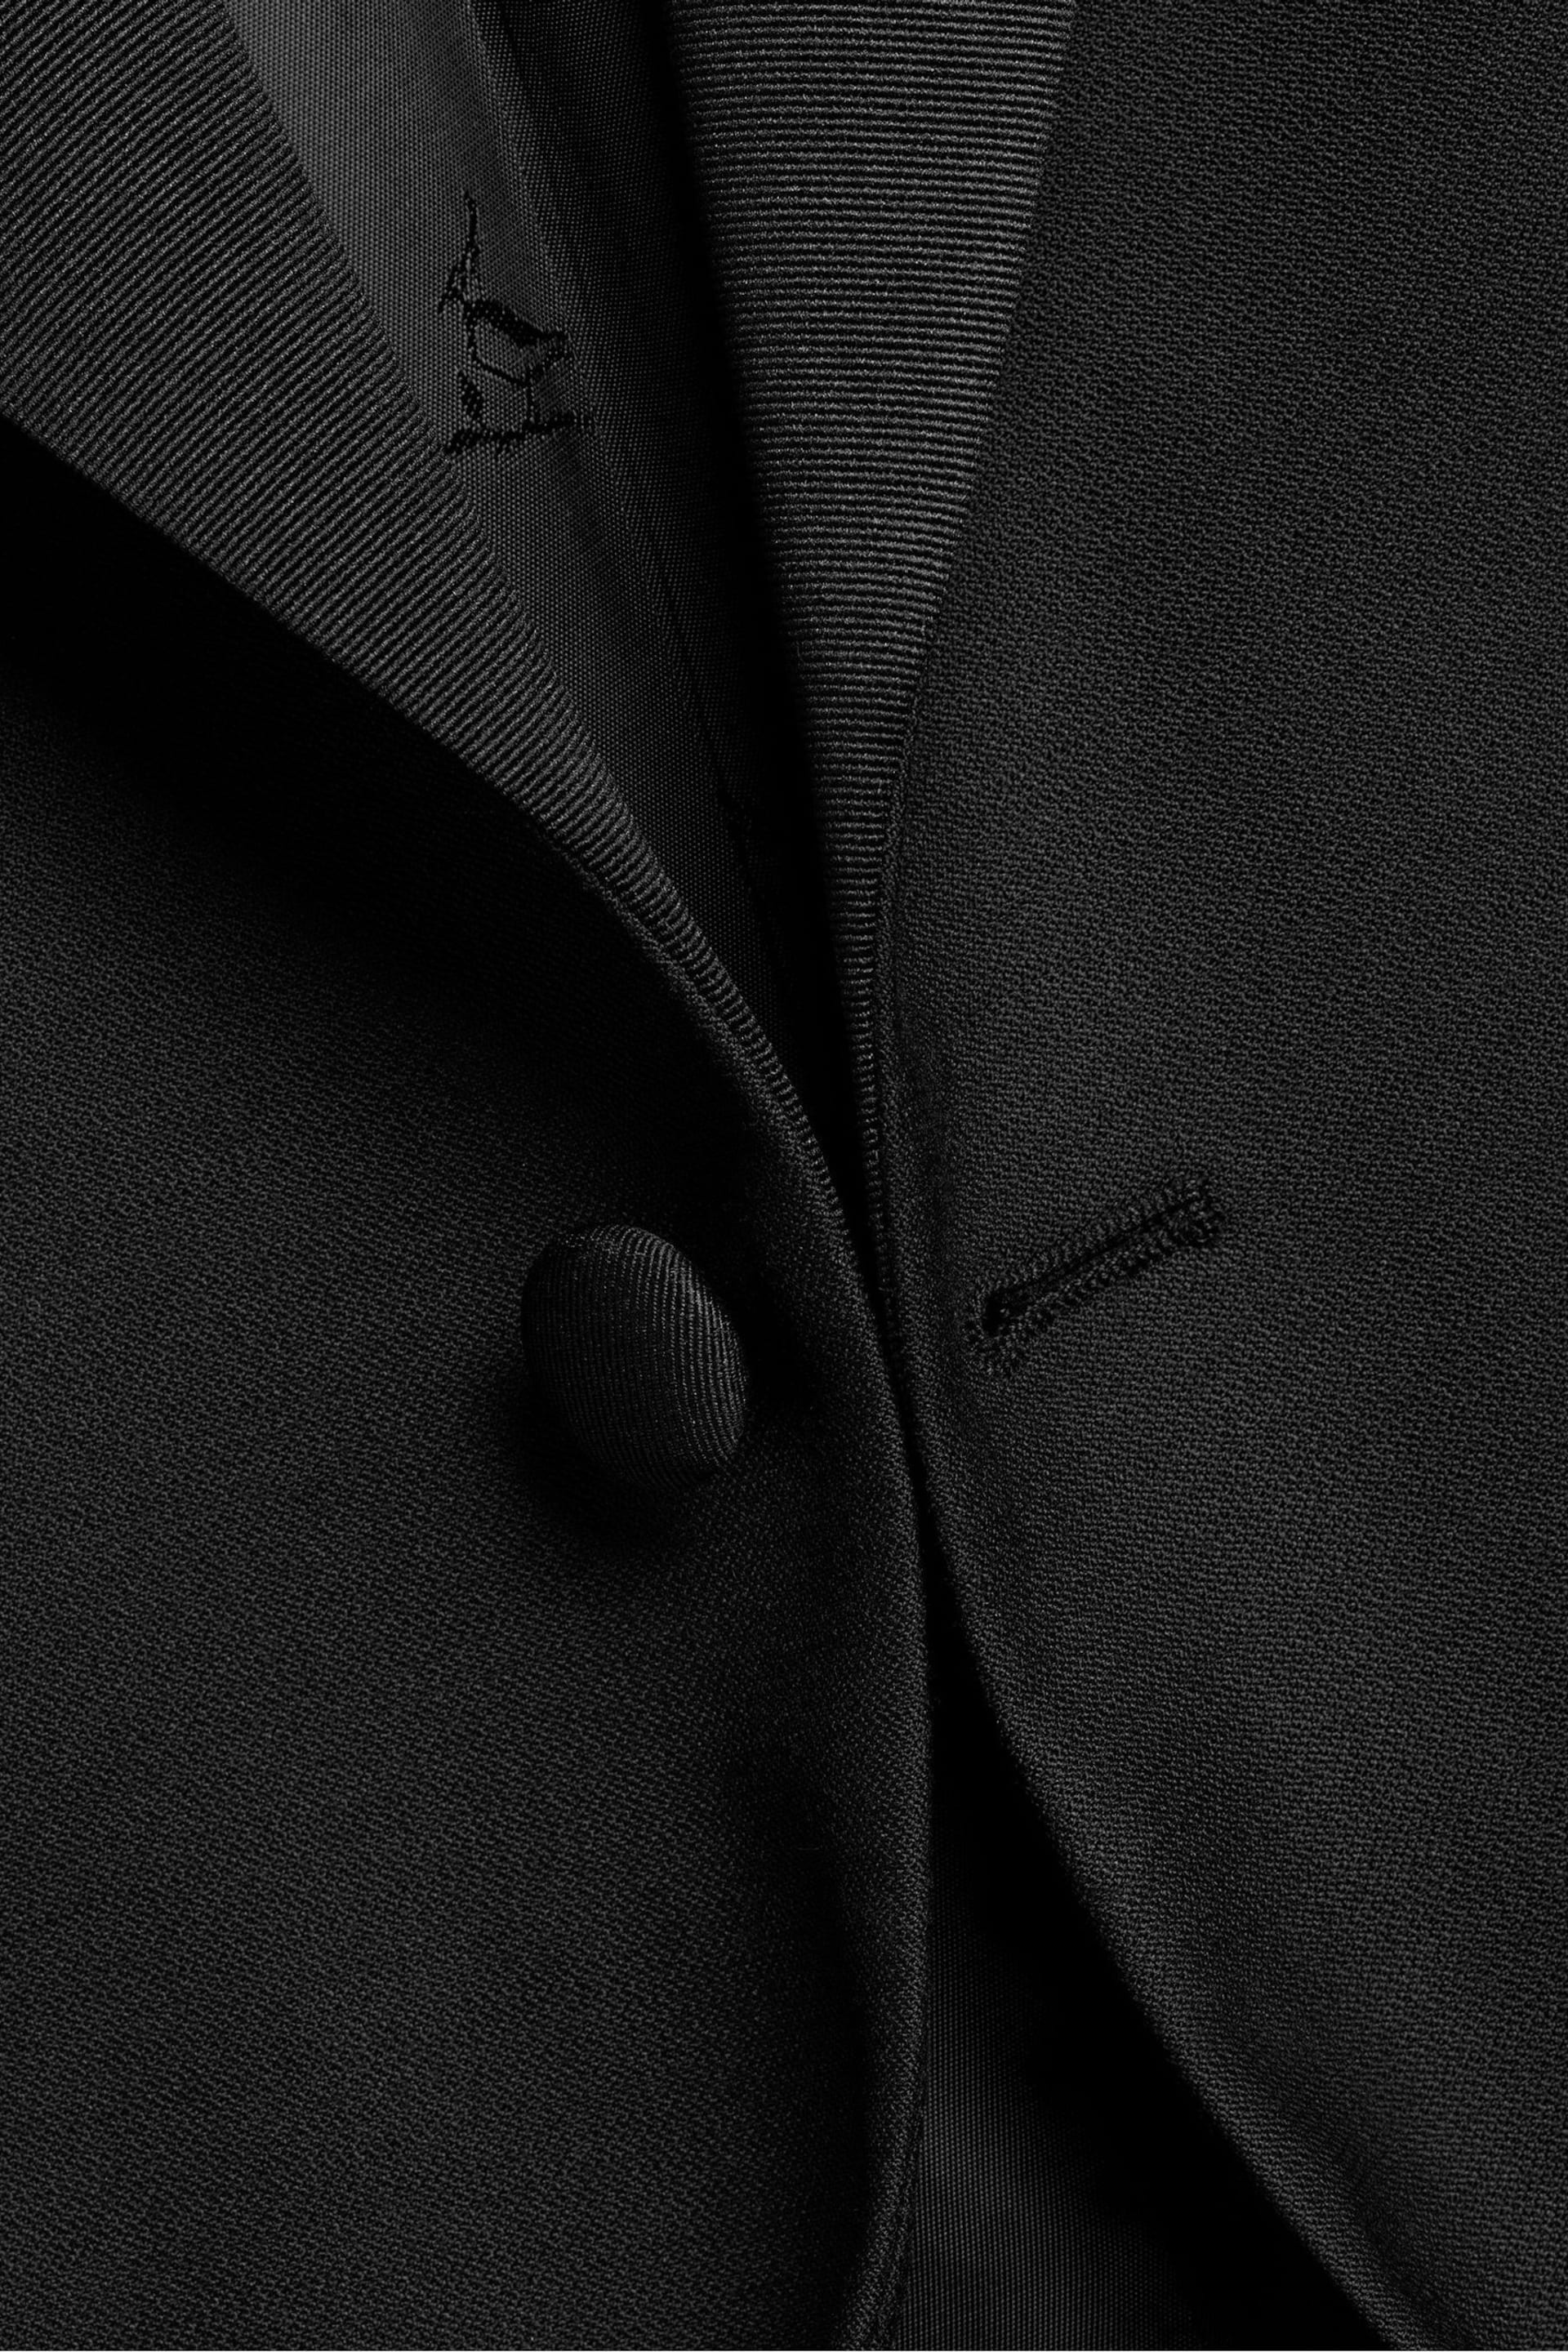 Charles Tyrwhitt Black Slim Fit Peak Lapel Dinner Suit: Jacket - Image 5 of 5